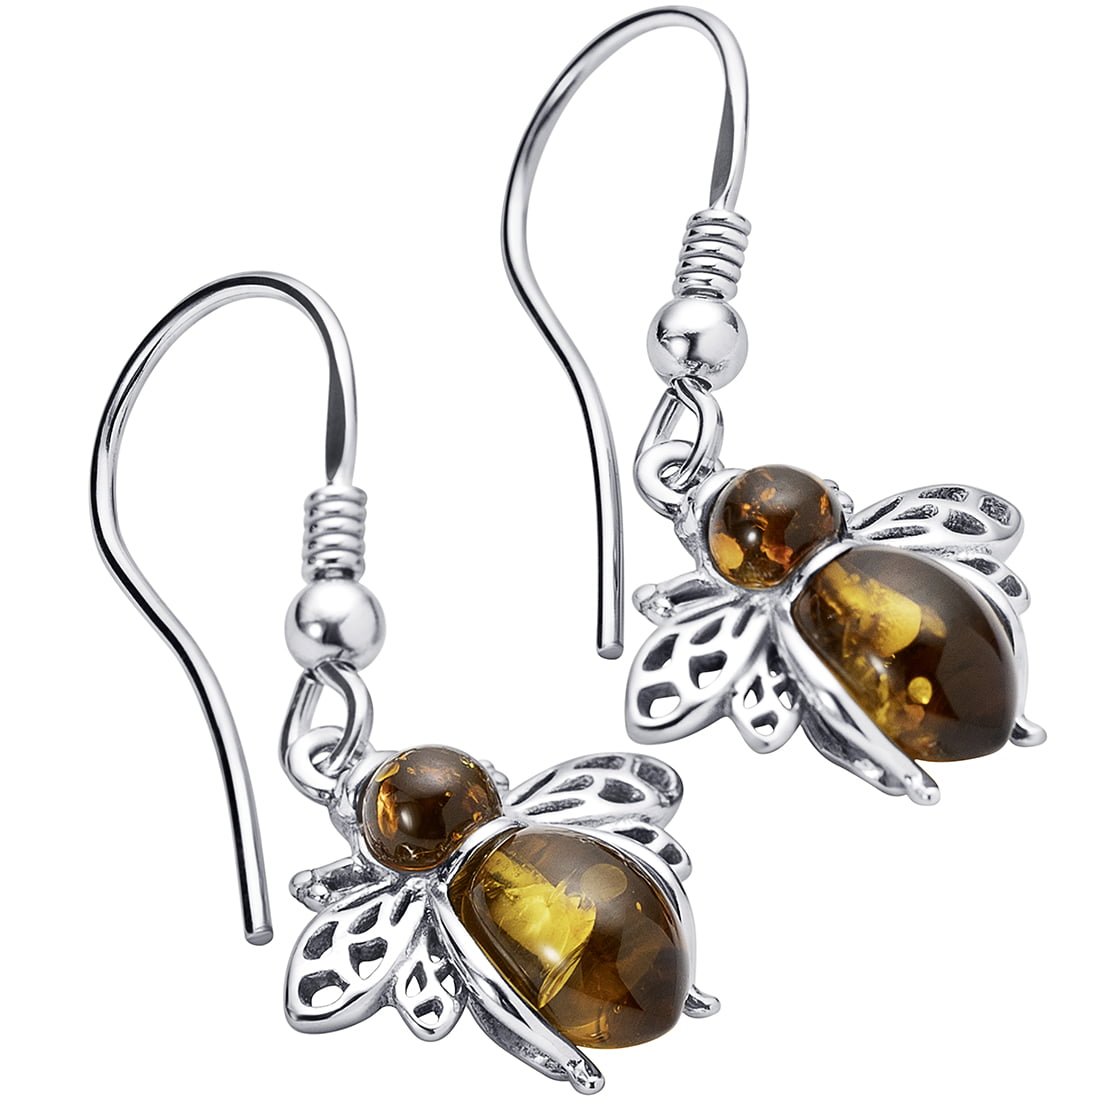 amber jewelry yellow amber earrings sterling silver studs butterfly earrings Baltic amber earrings gift for her summer earrings